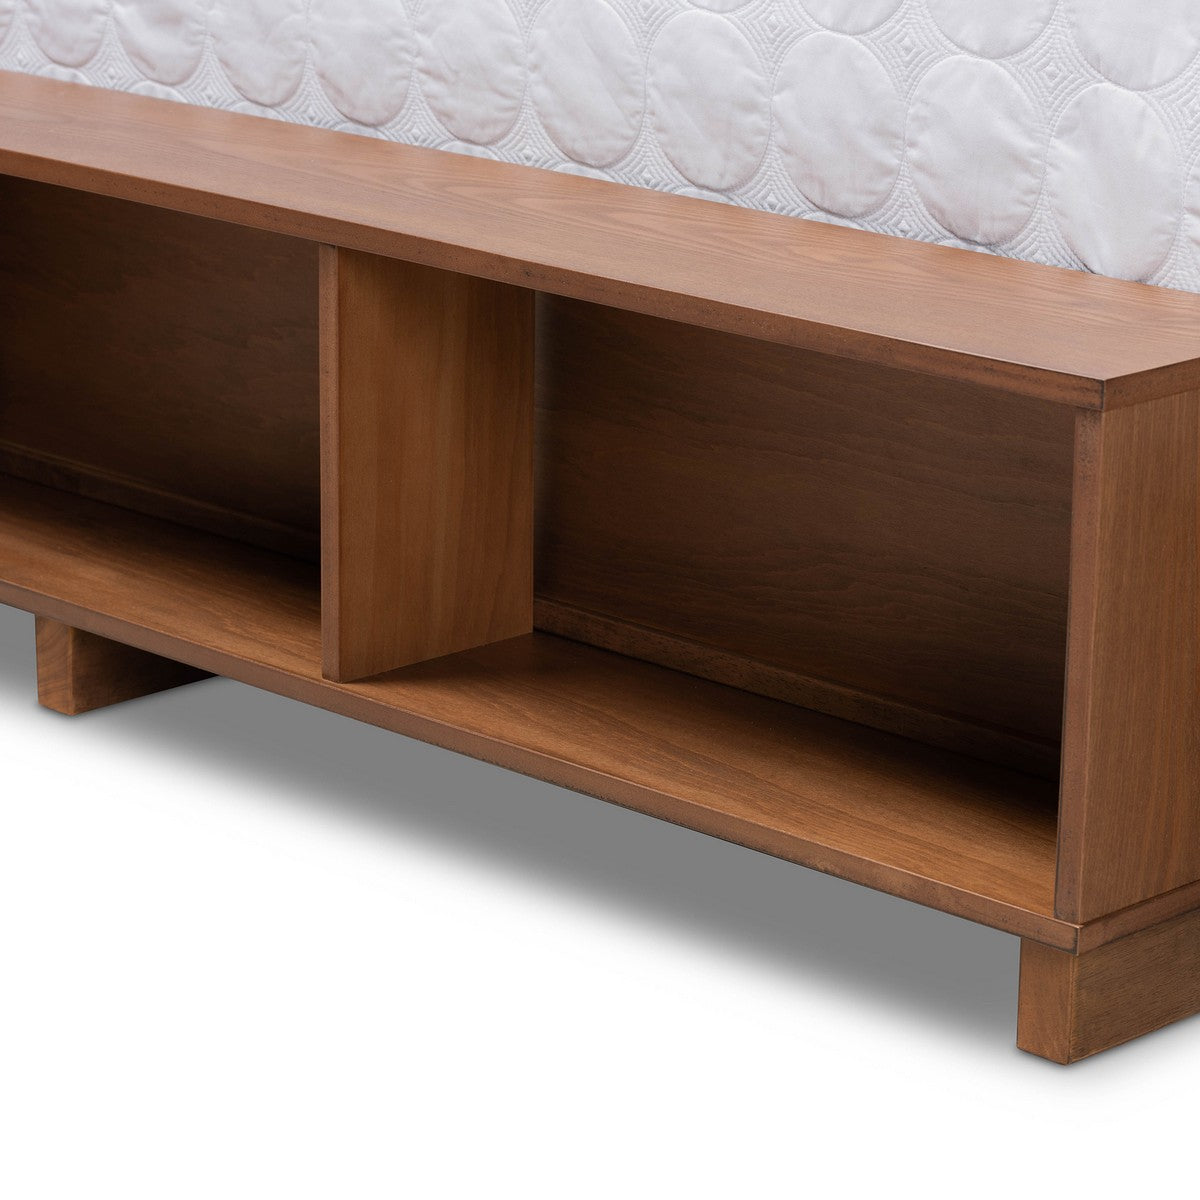 Baxton Studio Alba Modern Transitional Ash Walnut Brown Finished Wood Queen Size 4-Drawer Platform Storage Bed with Built-In Shelves